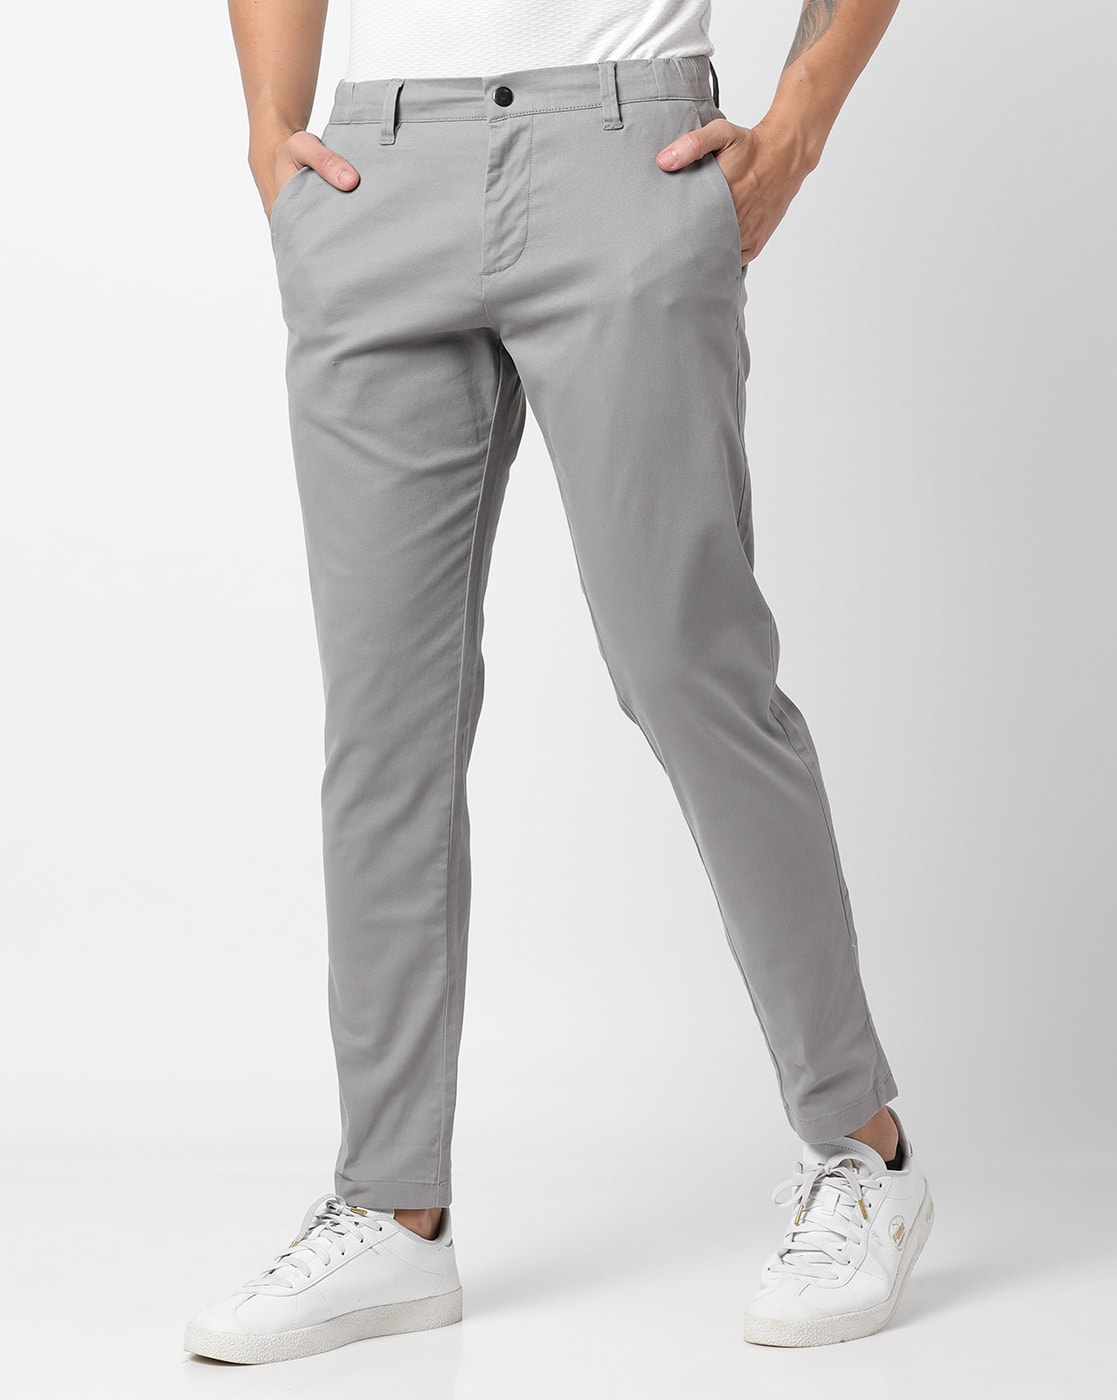 Discover 137+ mens casual grey trousers - camera.edu.vn